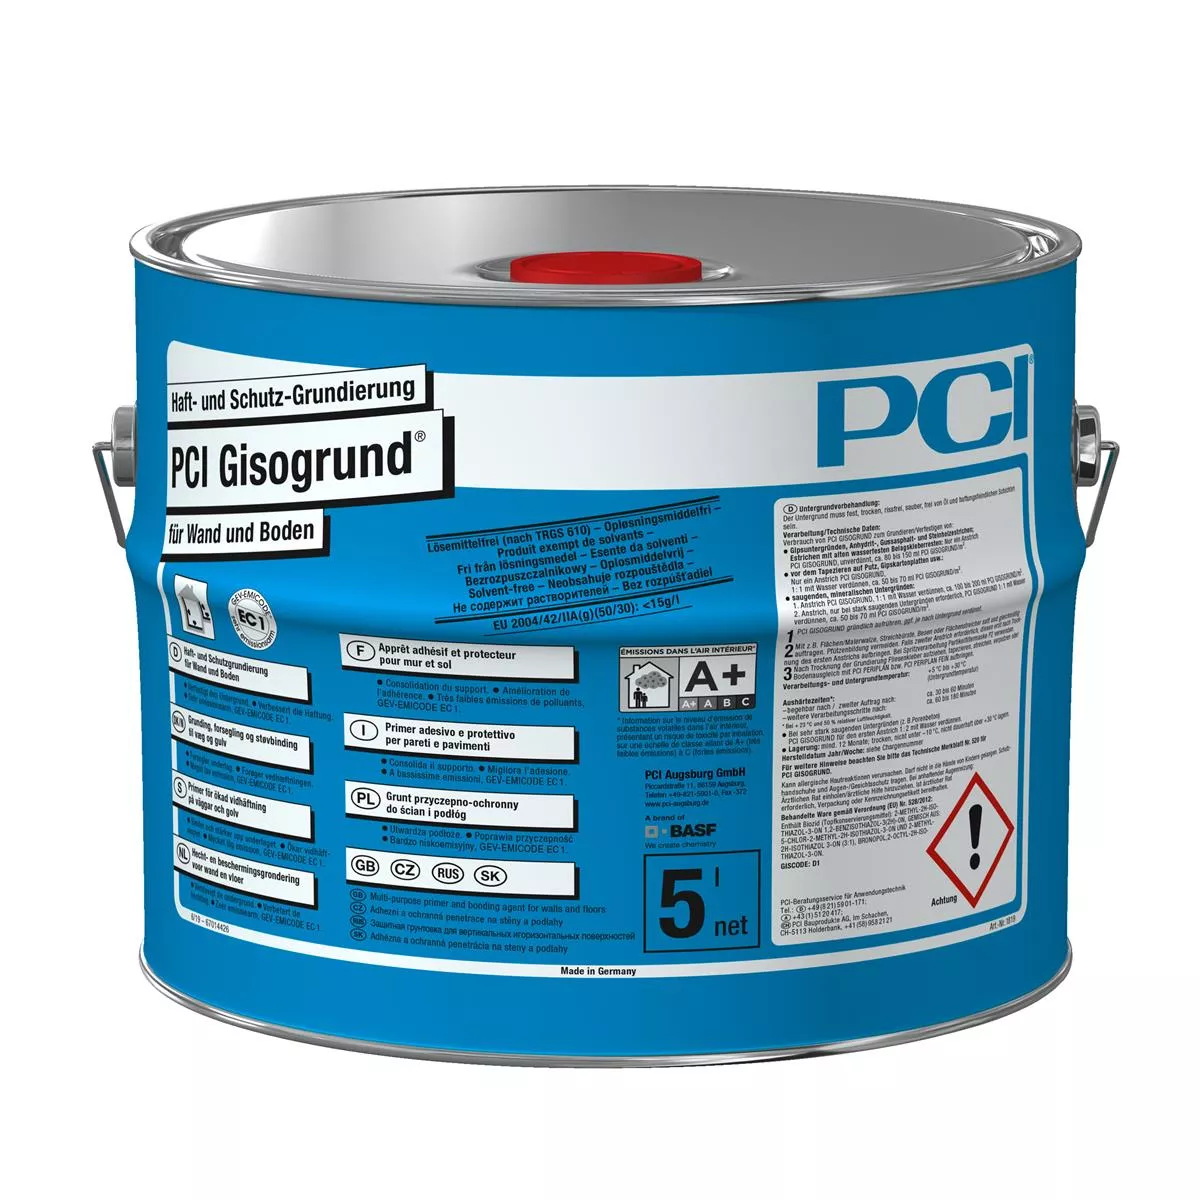 PCI Gisogrund adhesive and protective primer blue 5L